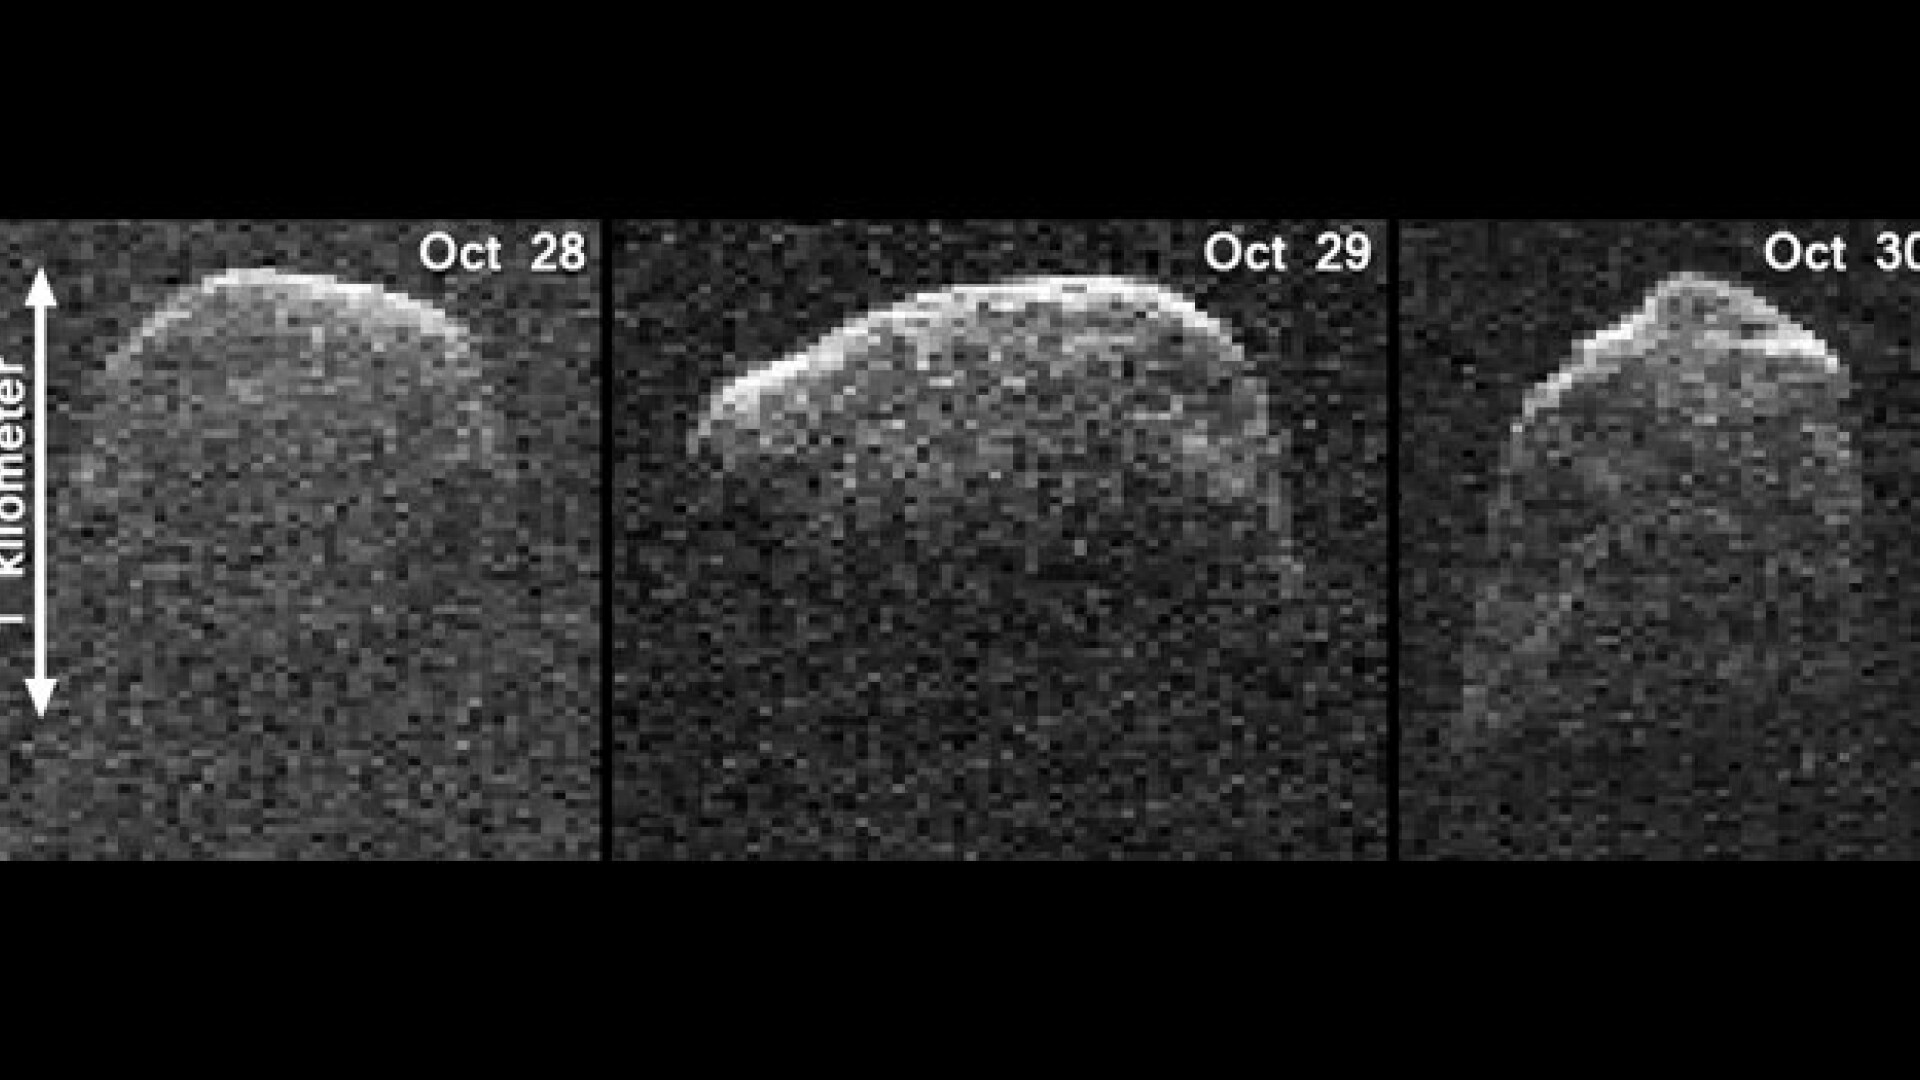 Asteroidul 2007 PA8